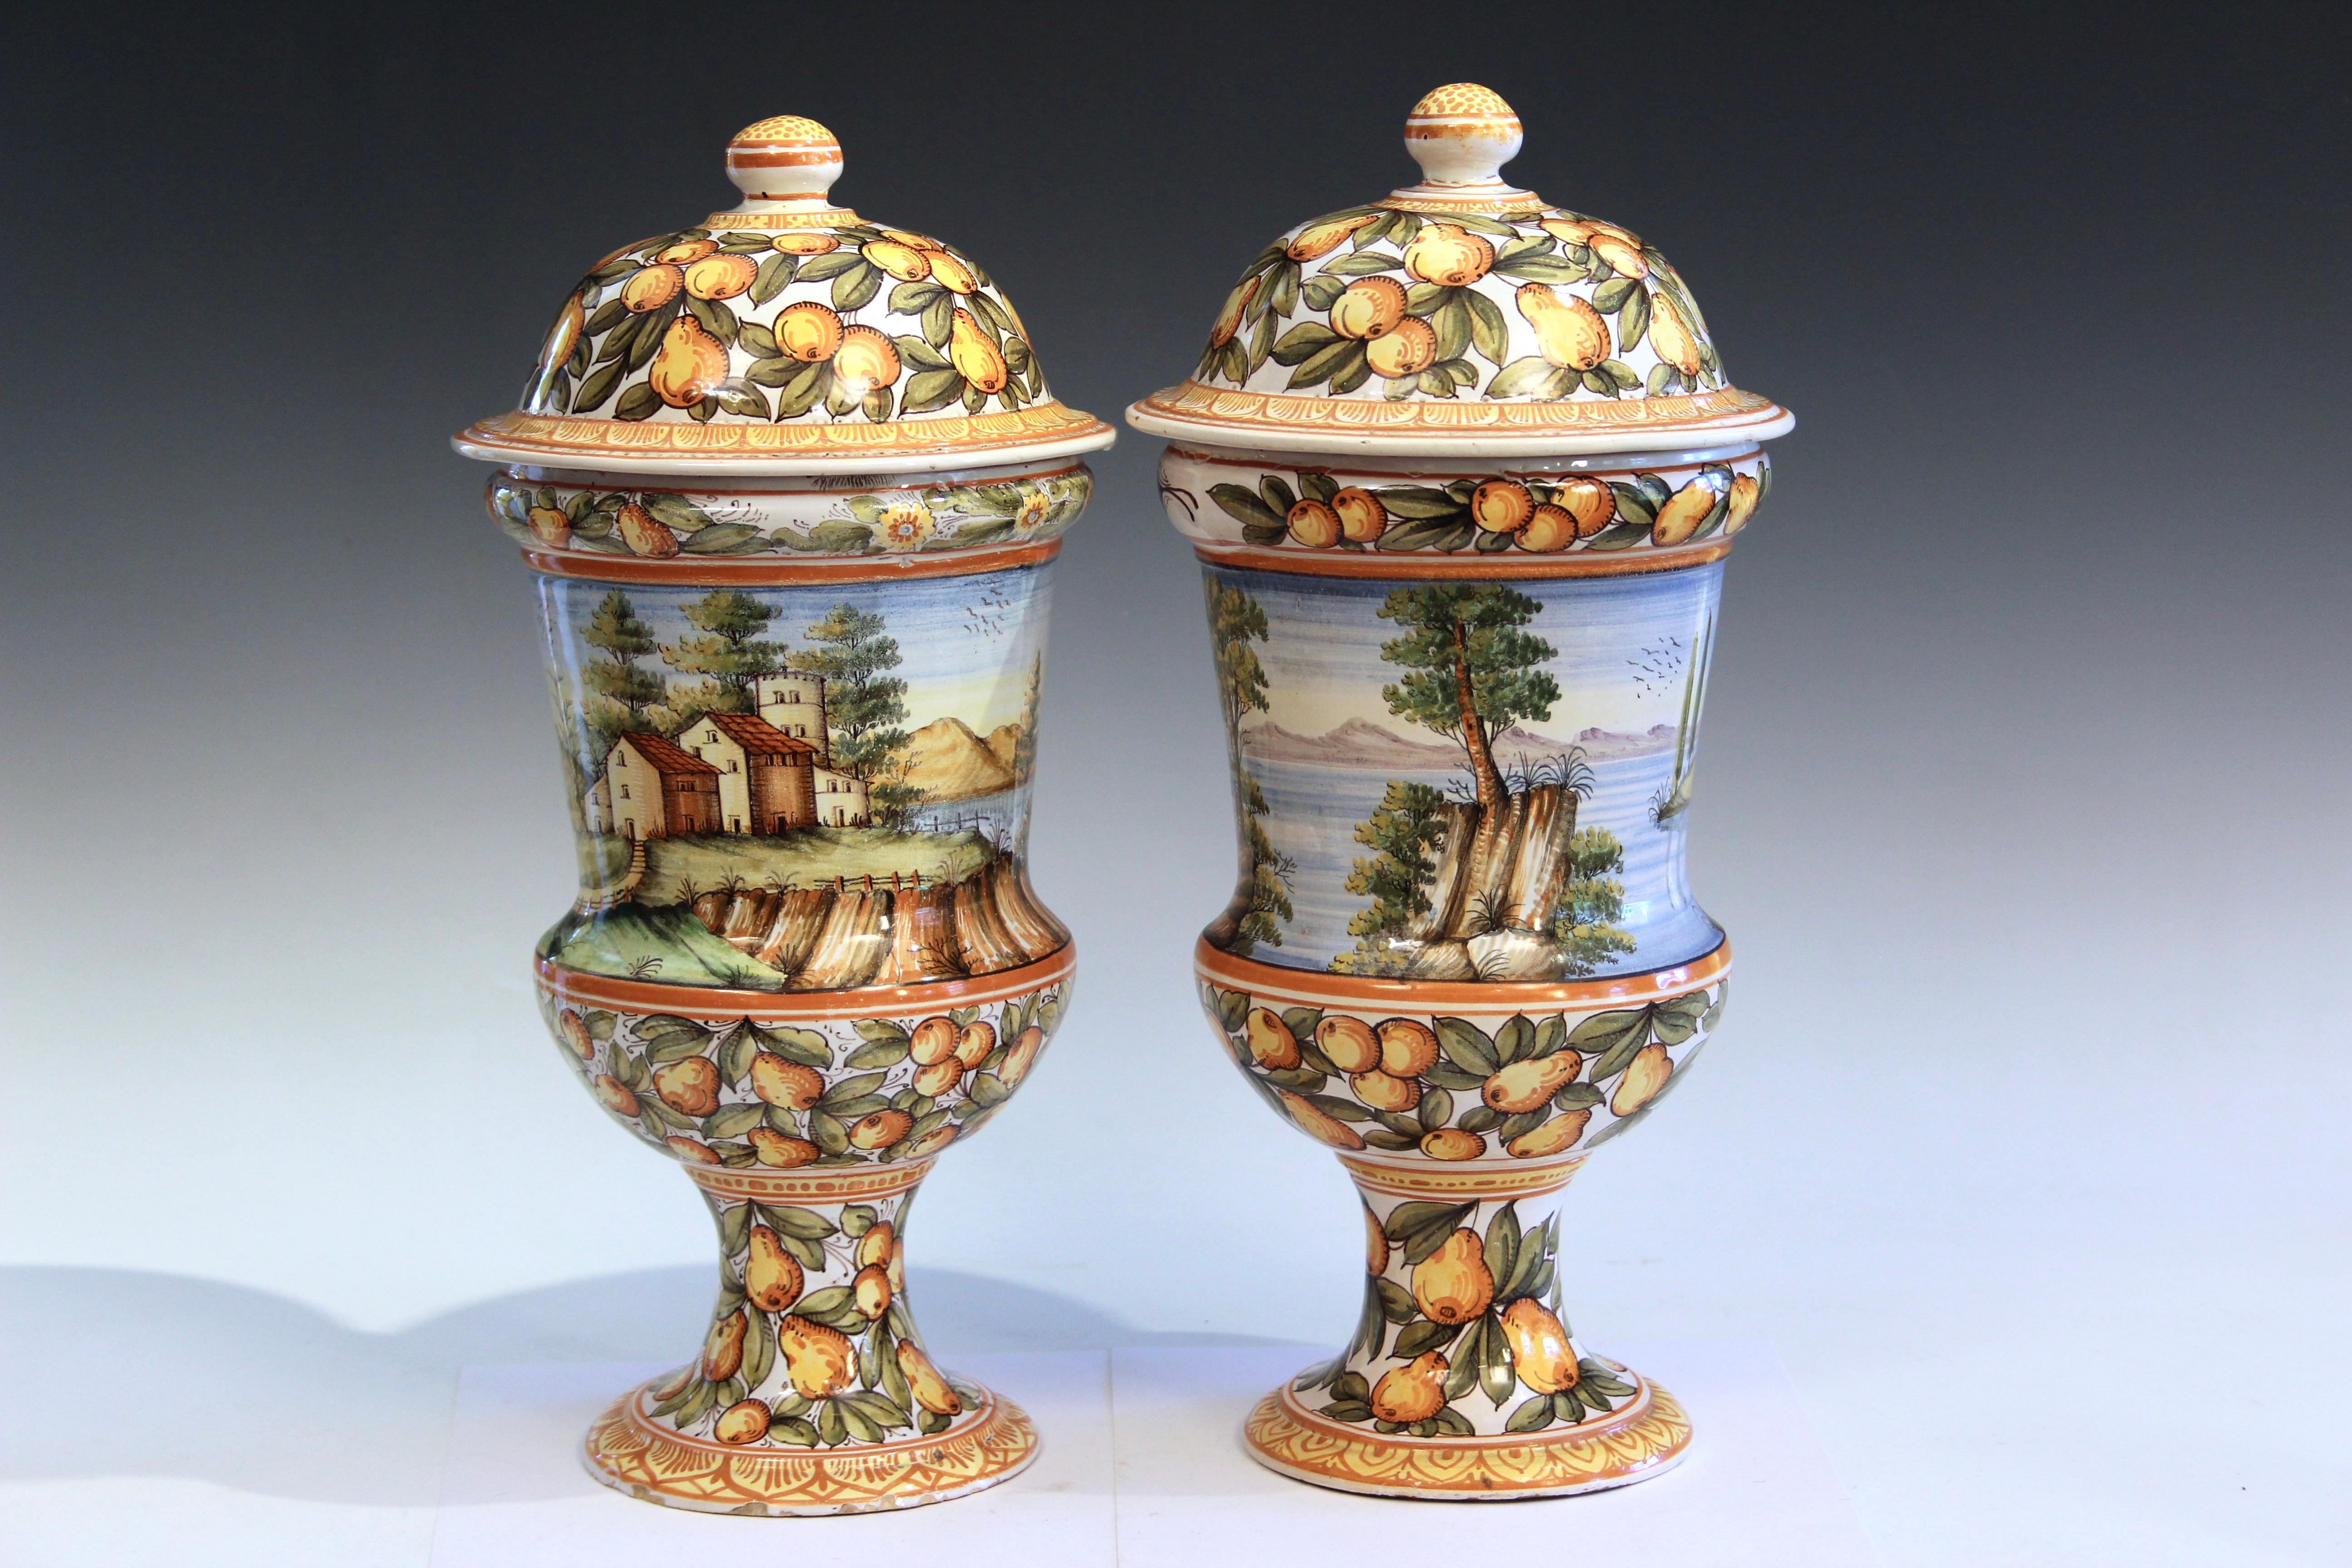 Antique Deruta Pottery Pair Urns Covers Italian Vintage Majolica Vases Jars For Sale